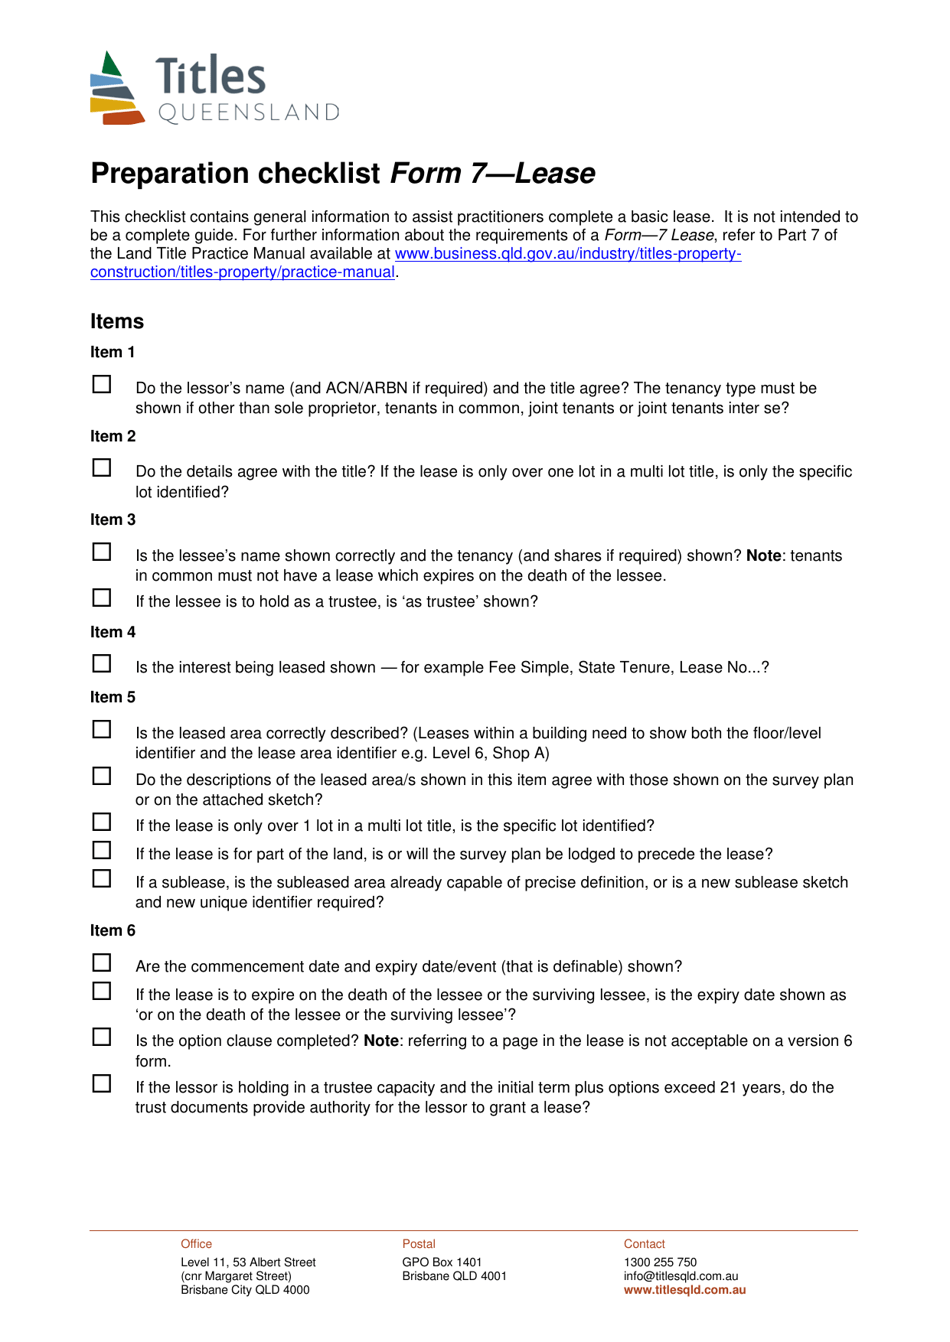 Form 7 Preparation Checklist - Lease - Queensland, Australia, Page 1